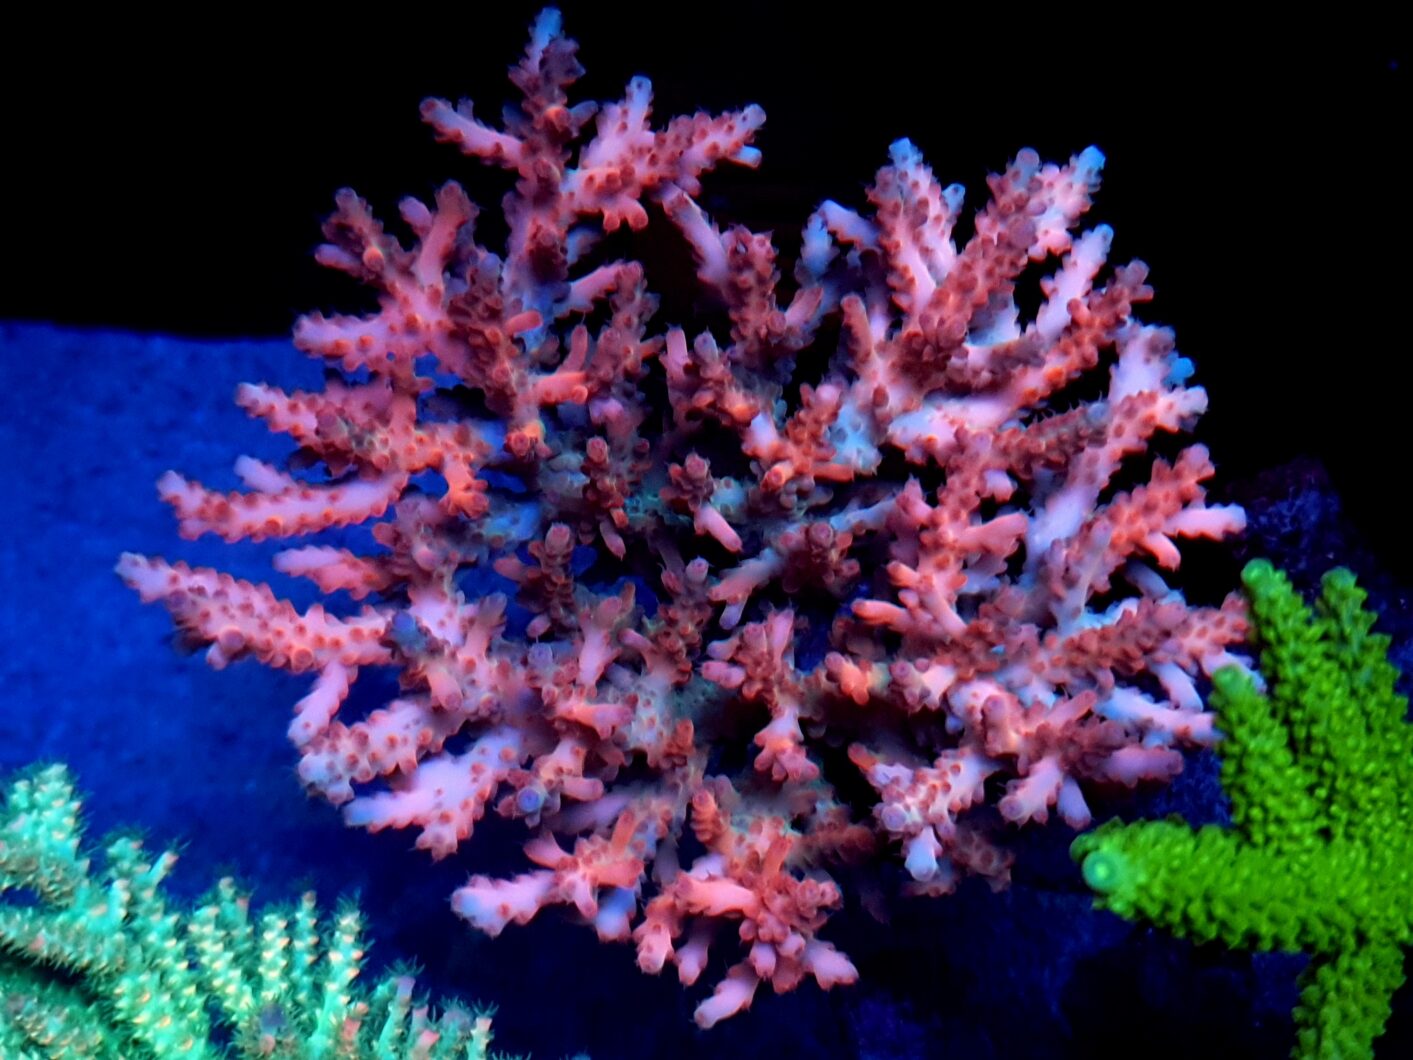 sps 산호색 Atlantik iCon Reef Aquarium LED 조명 첫인상 리뷰 사진 고객 제공2